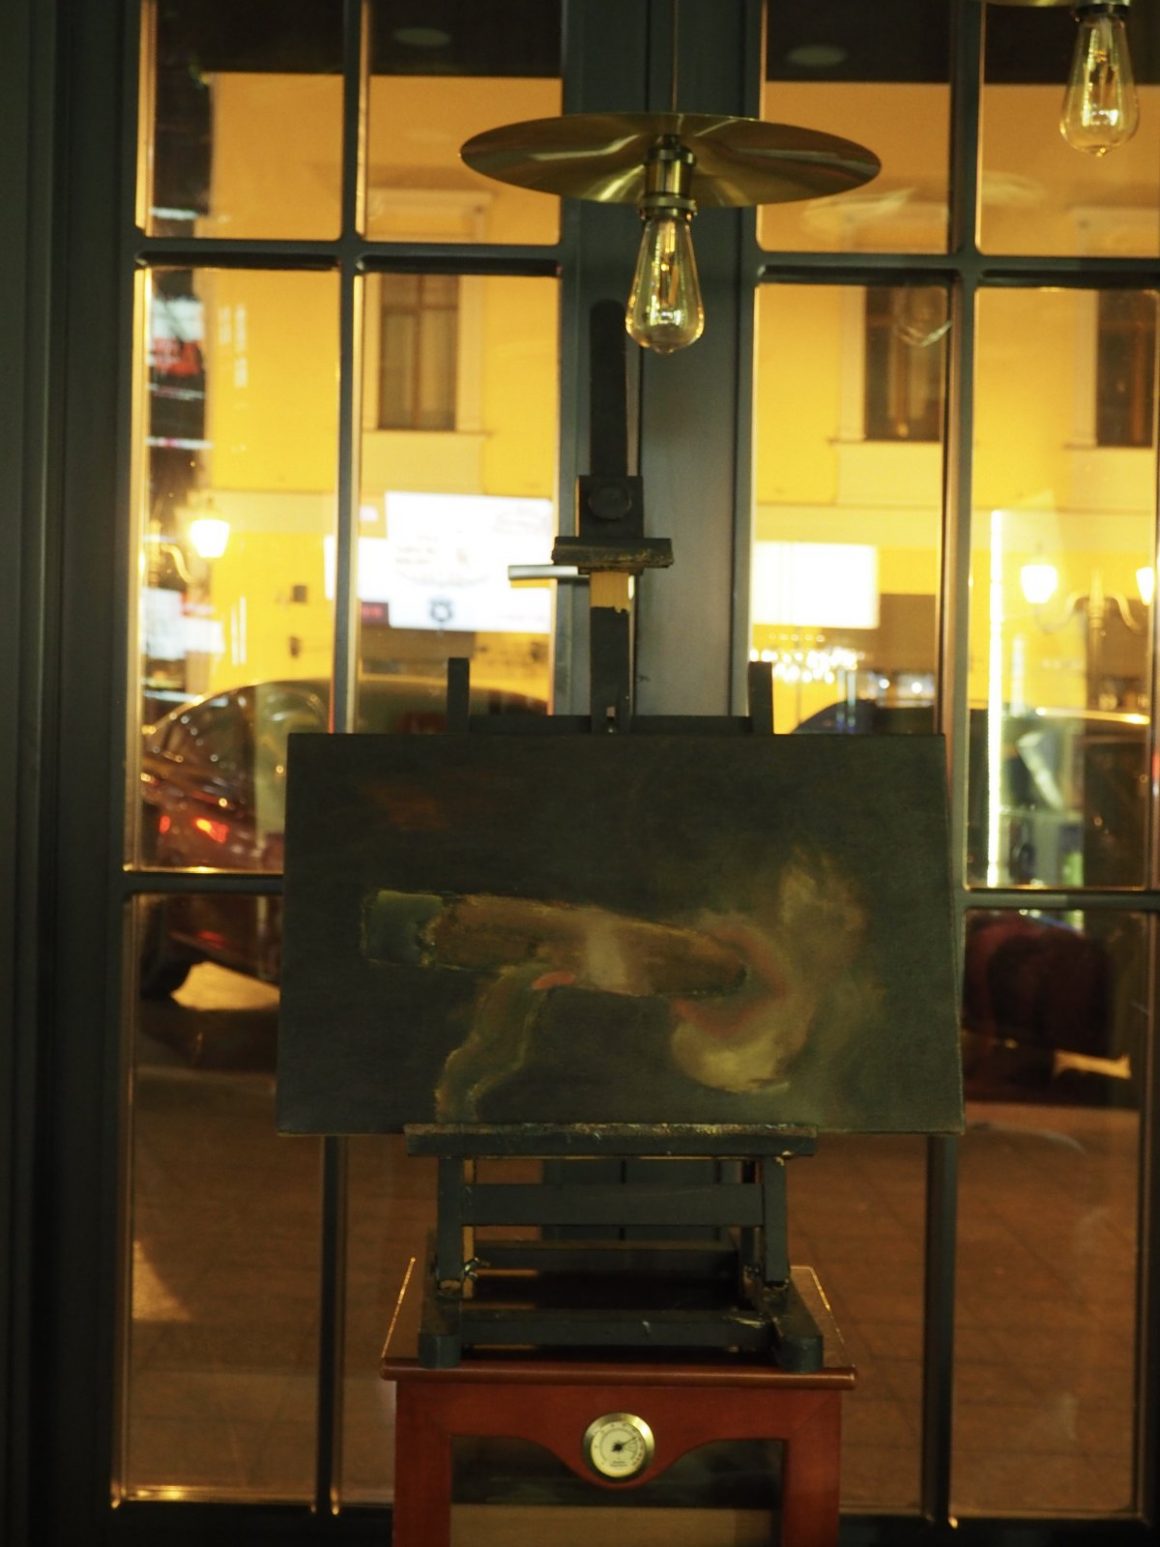 ART CHILI представил сигарную тему в живописи